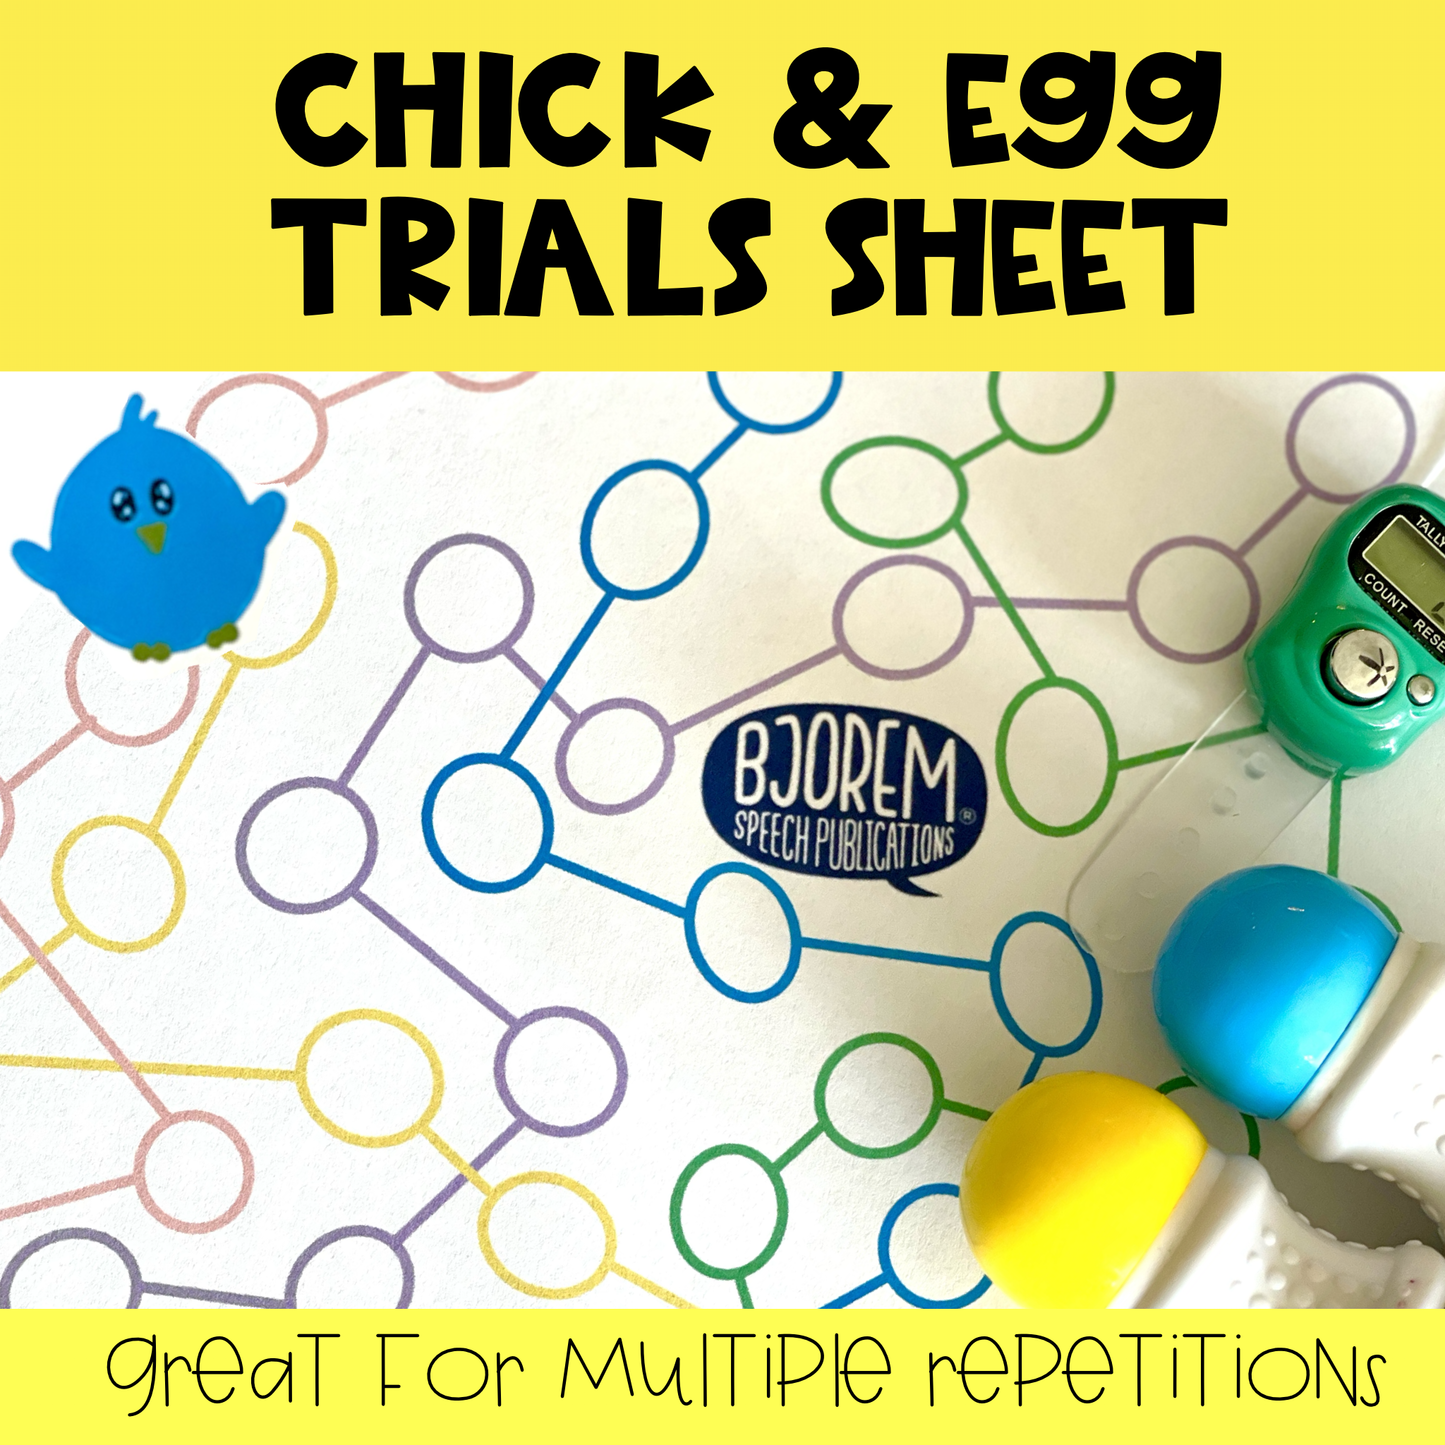 Chick & Egg Trials Sheet - Download